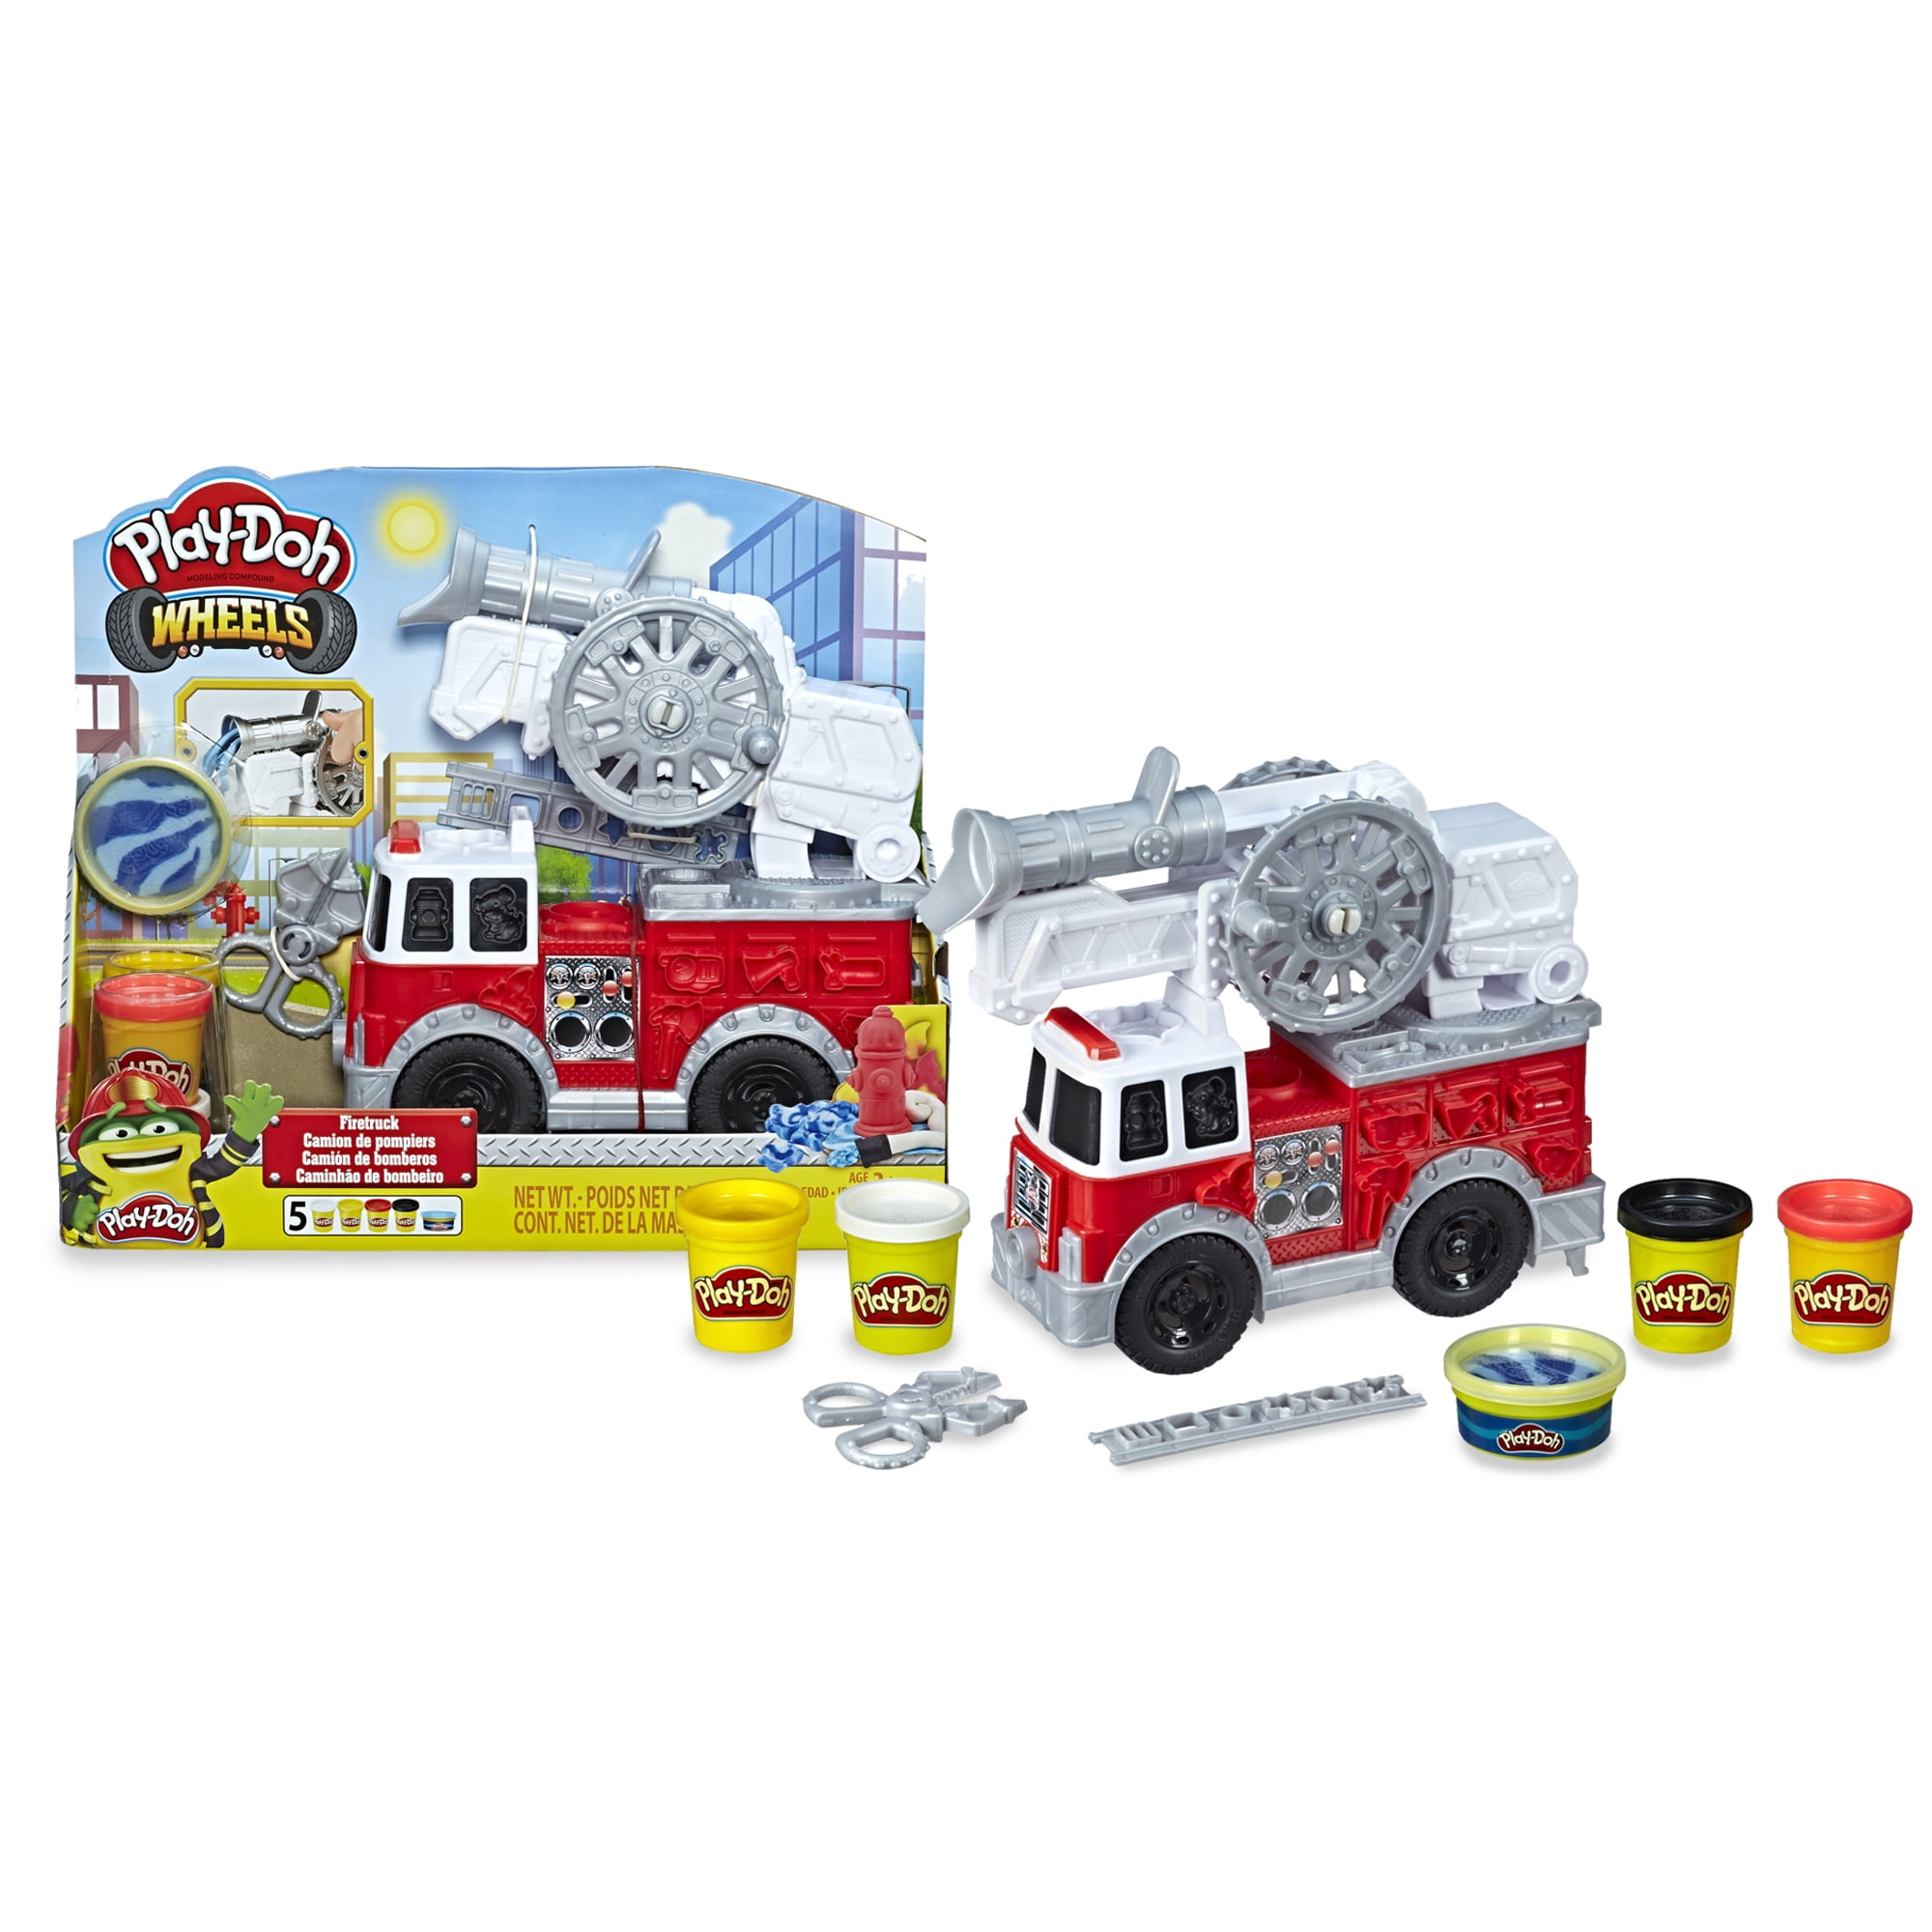 Play-Doh Wheels Firetruck Toy 